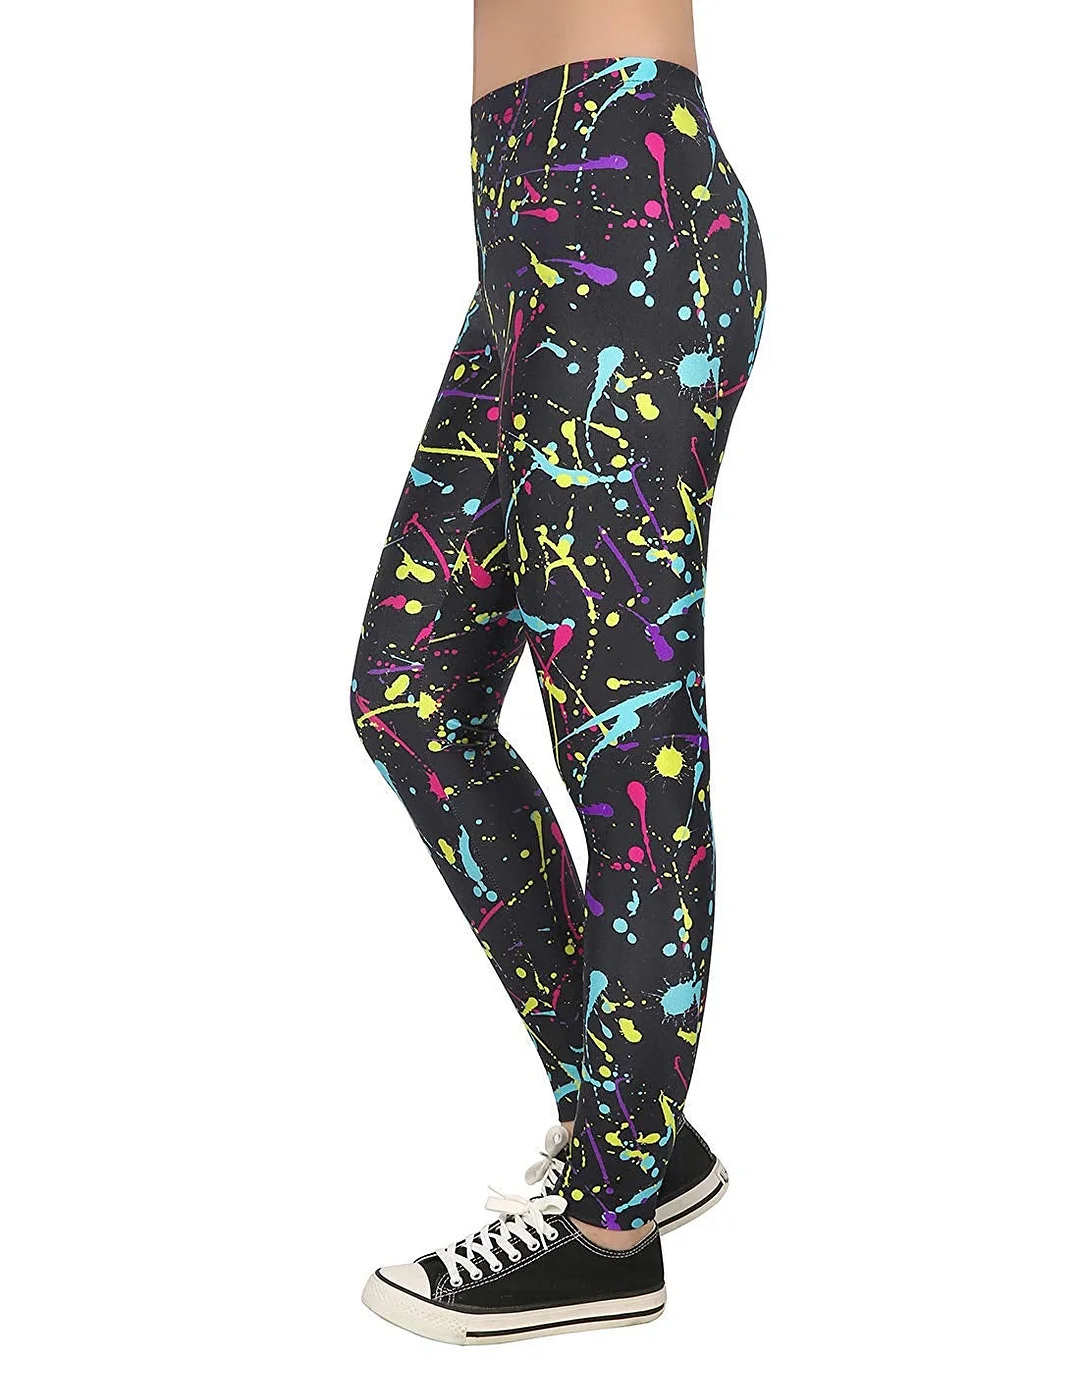 Trendy Design Workout Leggings - Fun Fashion Graphic Printed Cute Patterns